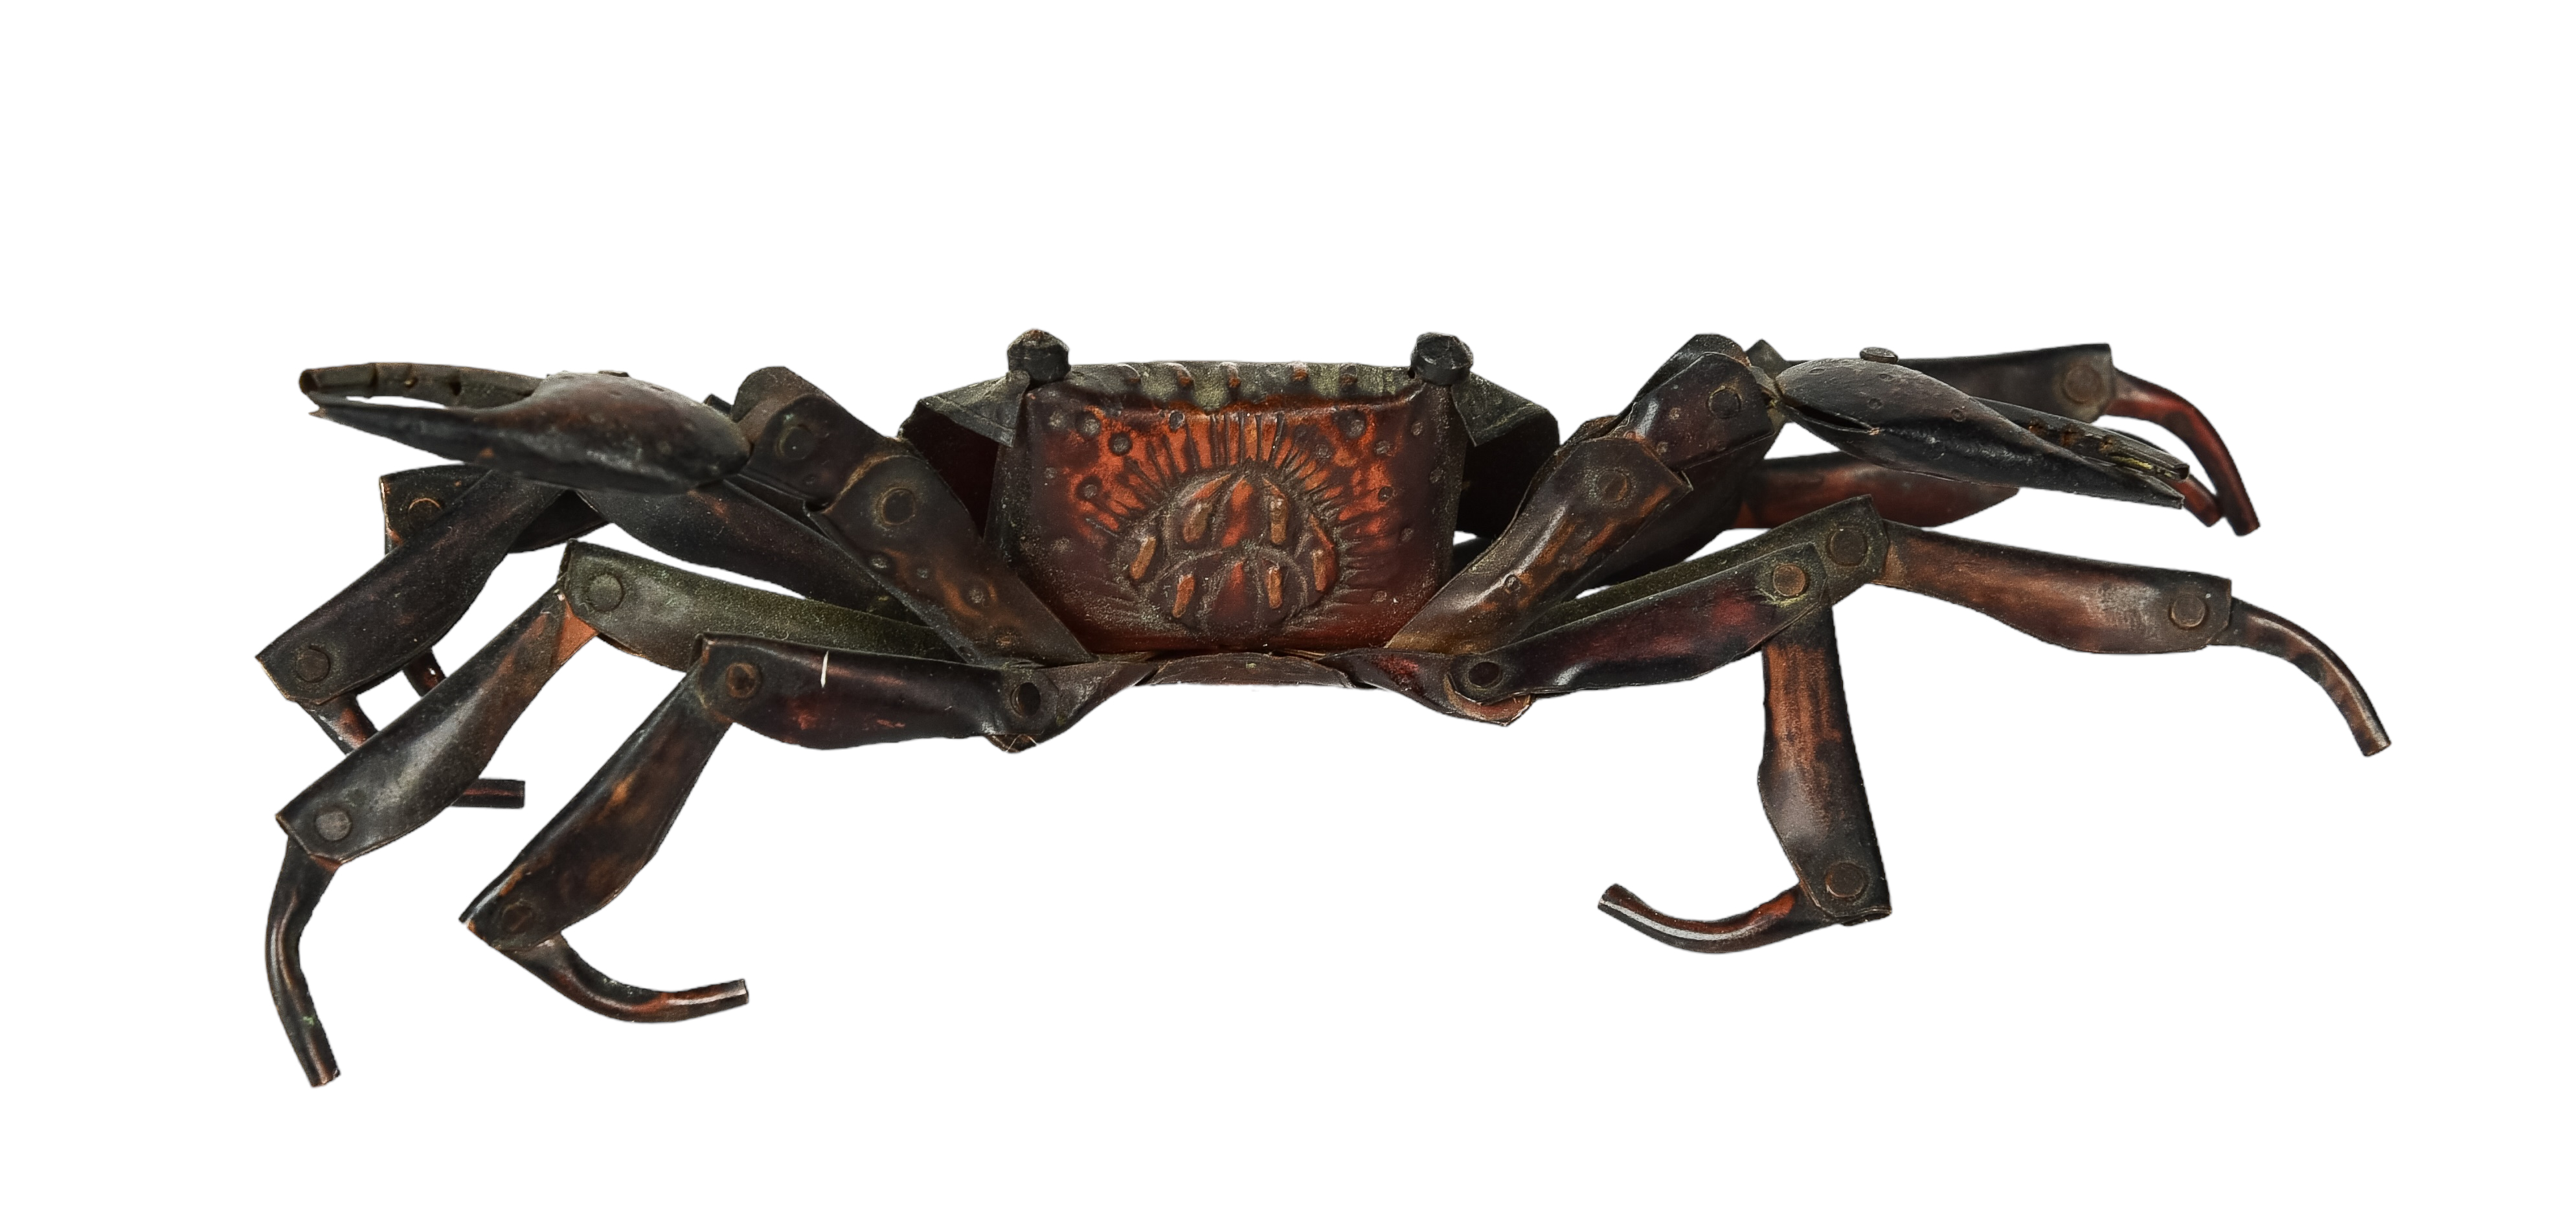 Japanese copper articulated crab 3b1c6e